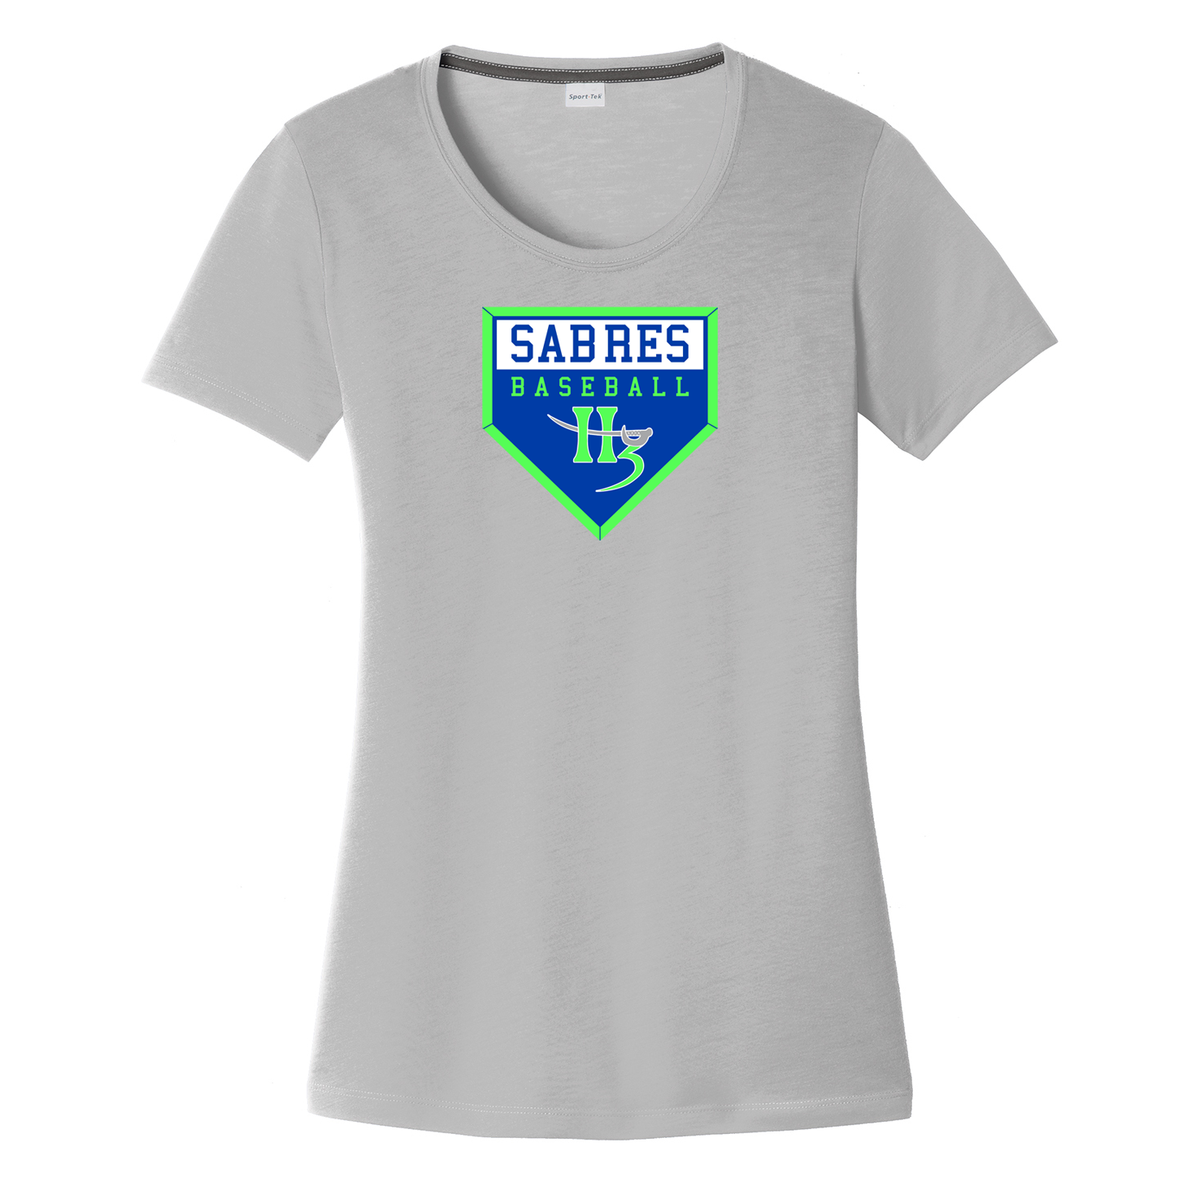 H3 Sabres Baseball  Women's CottonTouch Performance T-Shirt